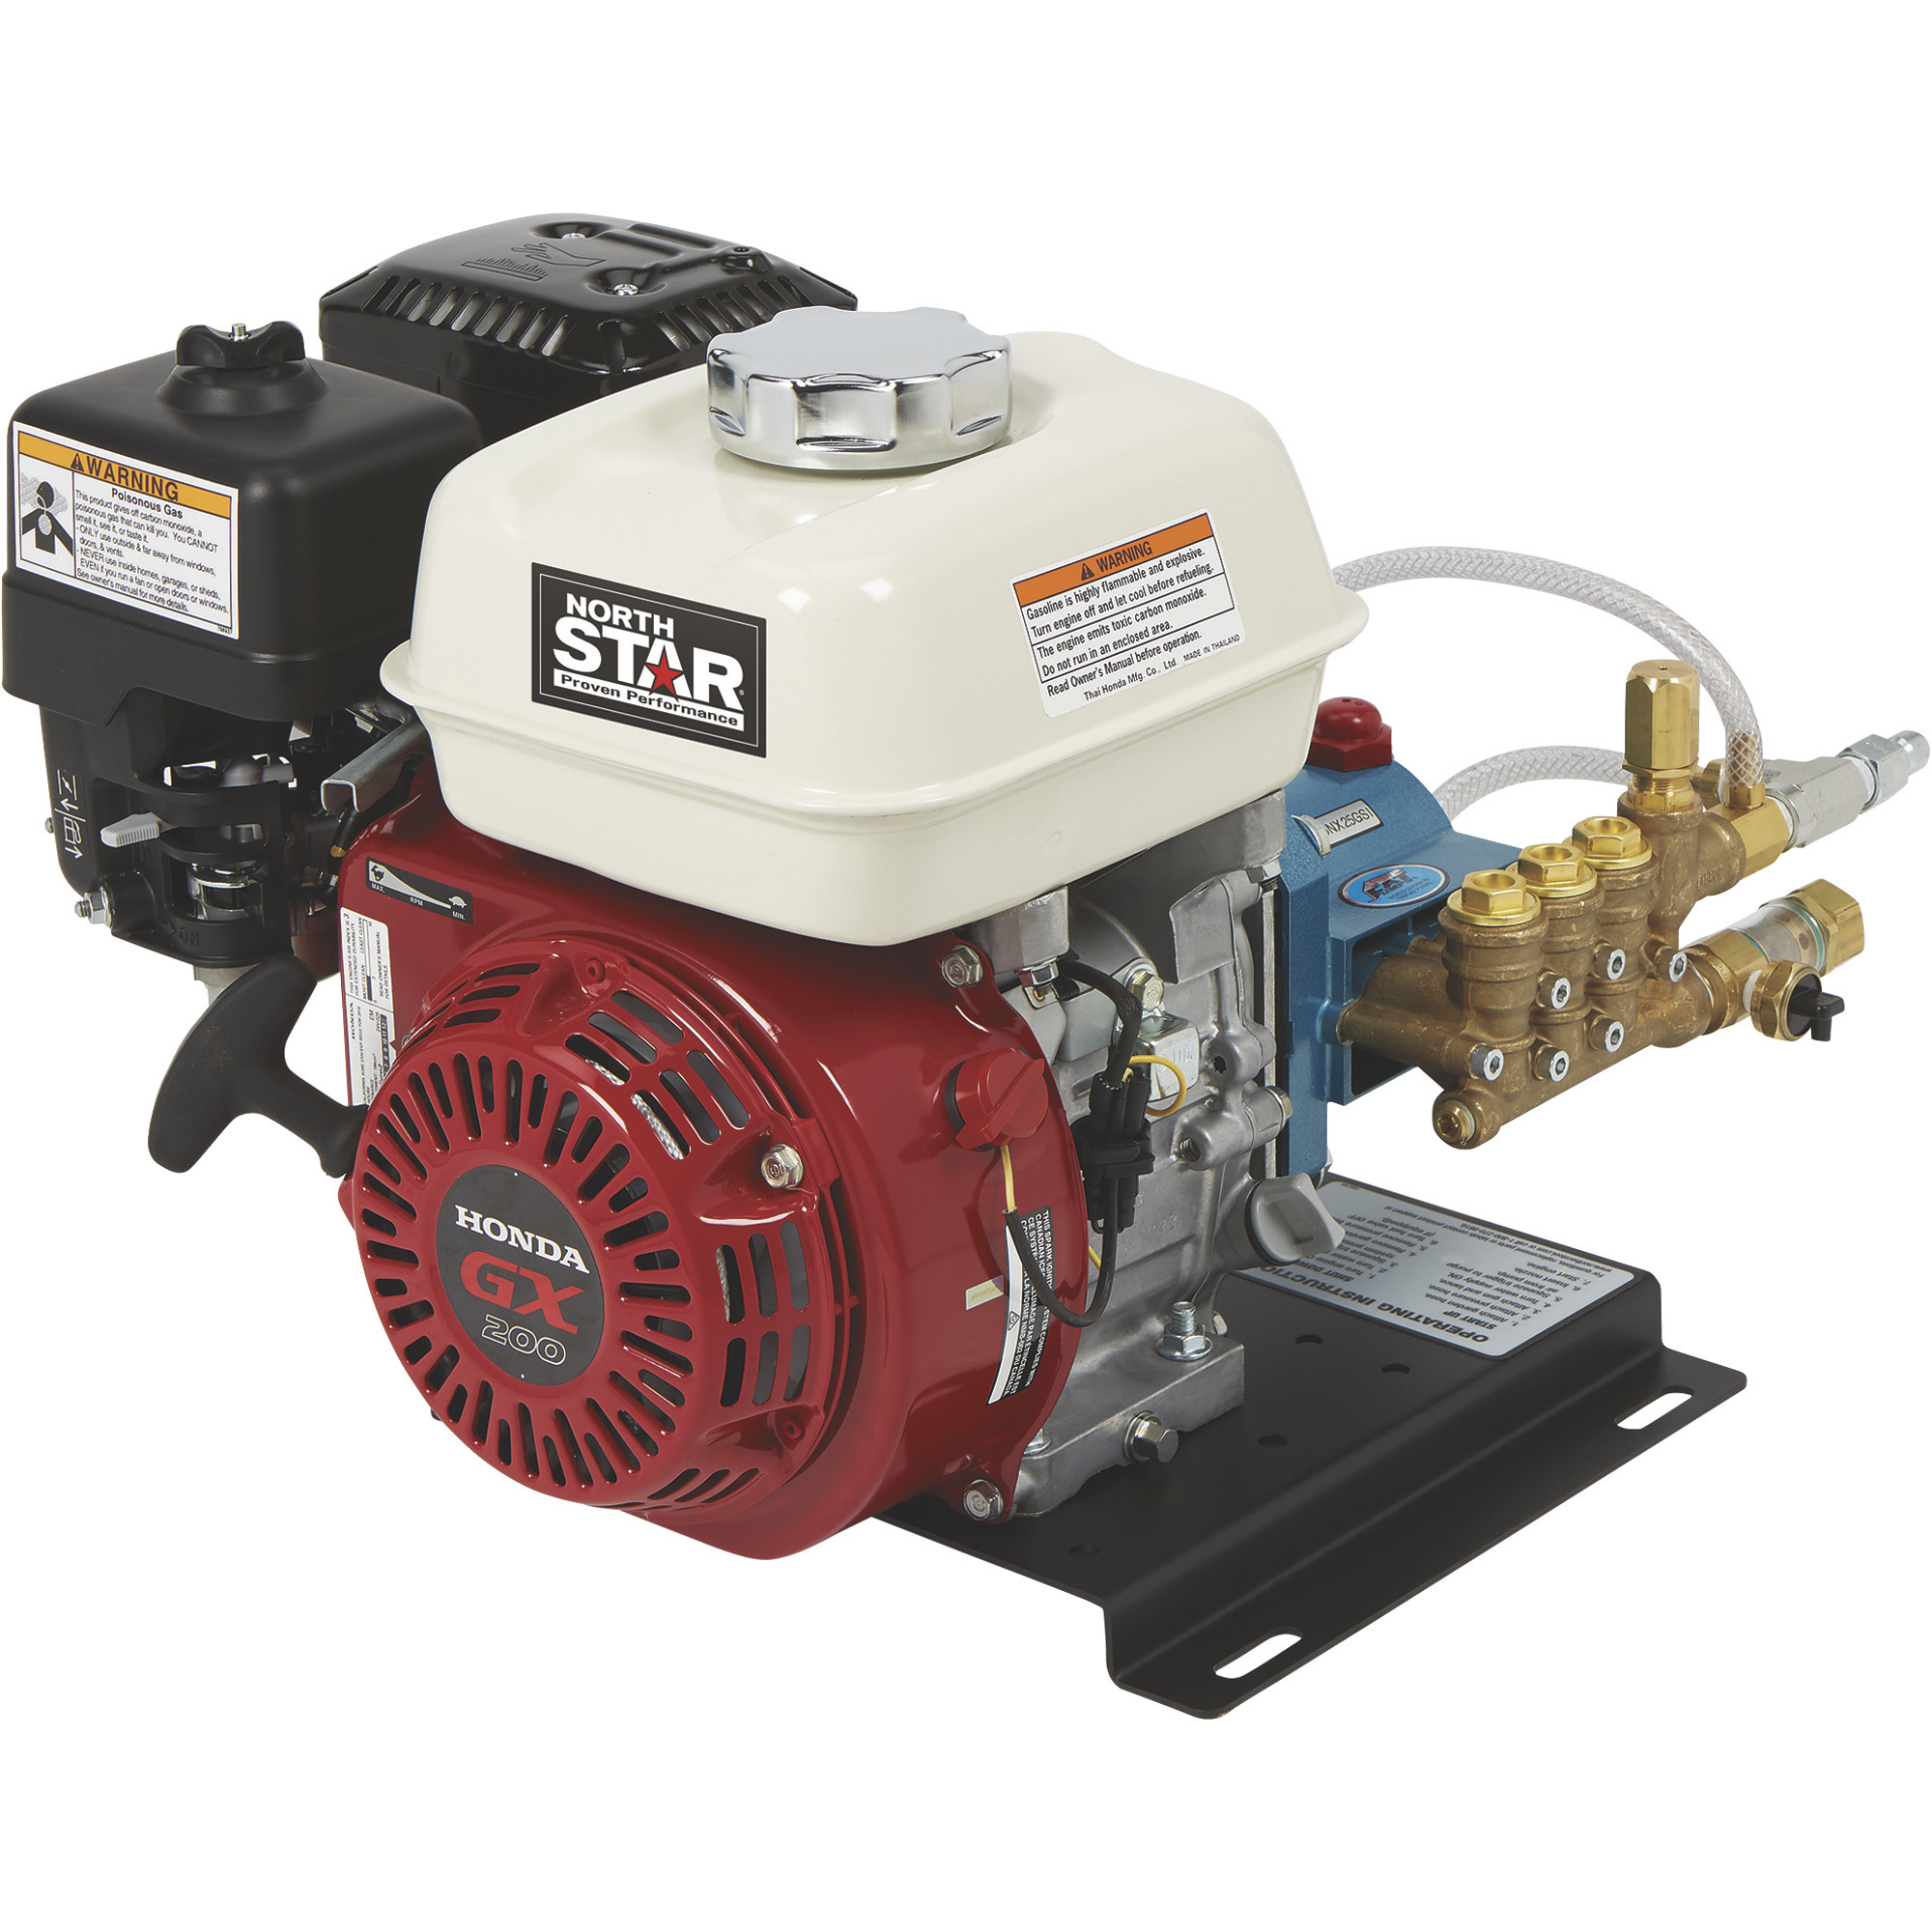 NorthStar 3300 PSI, 2.5 GPM Pressure Washer Kit with Honda GX200 Engine â CAT 4DNX Pump